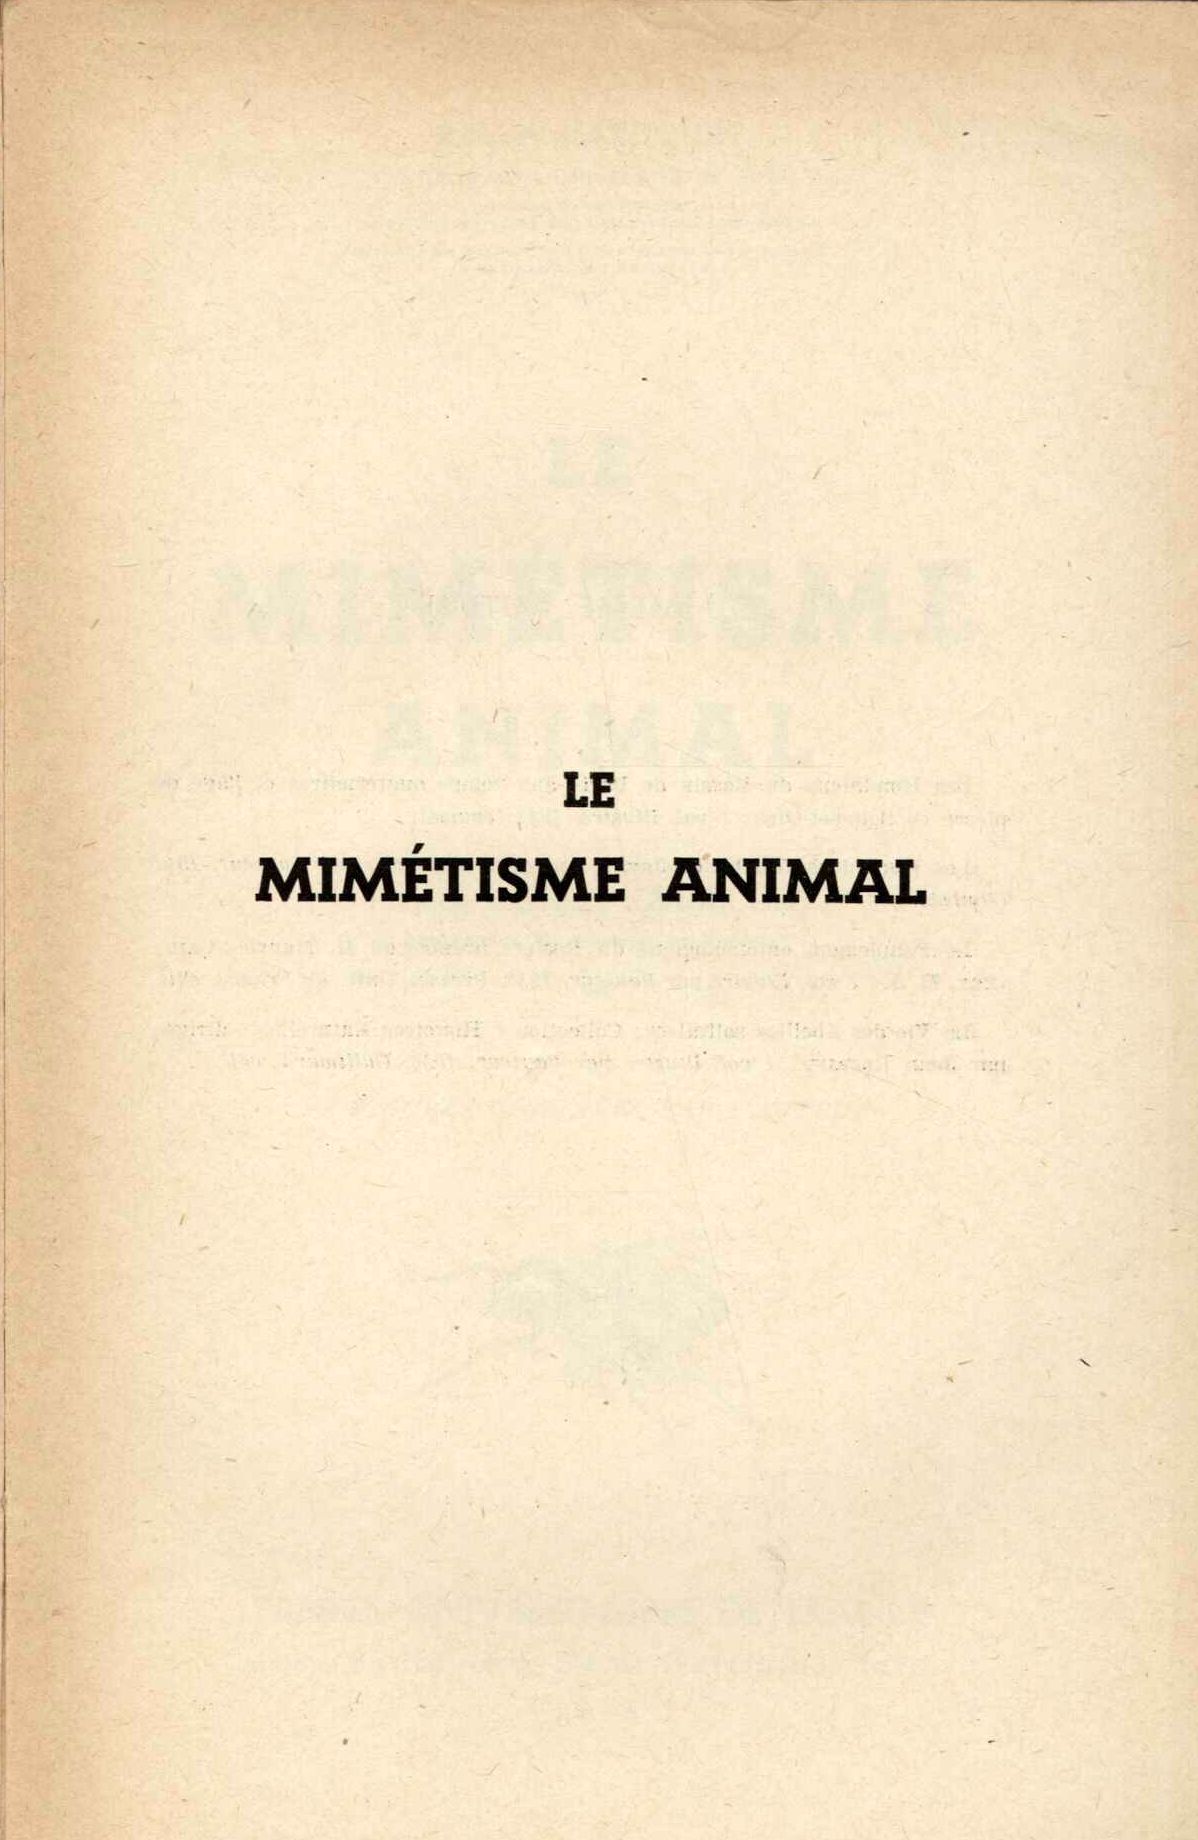 Le mimetisme animal